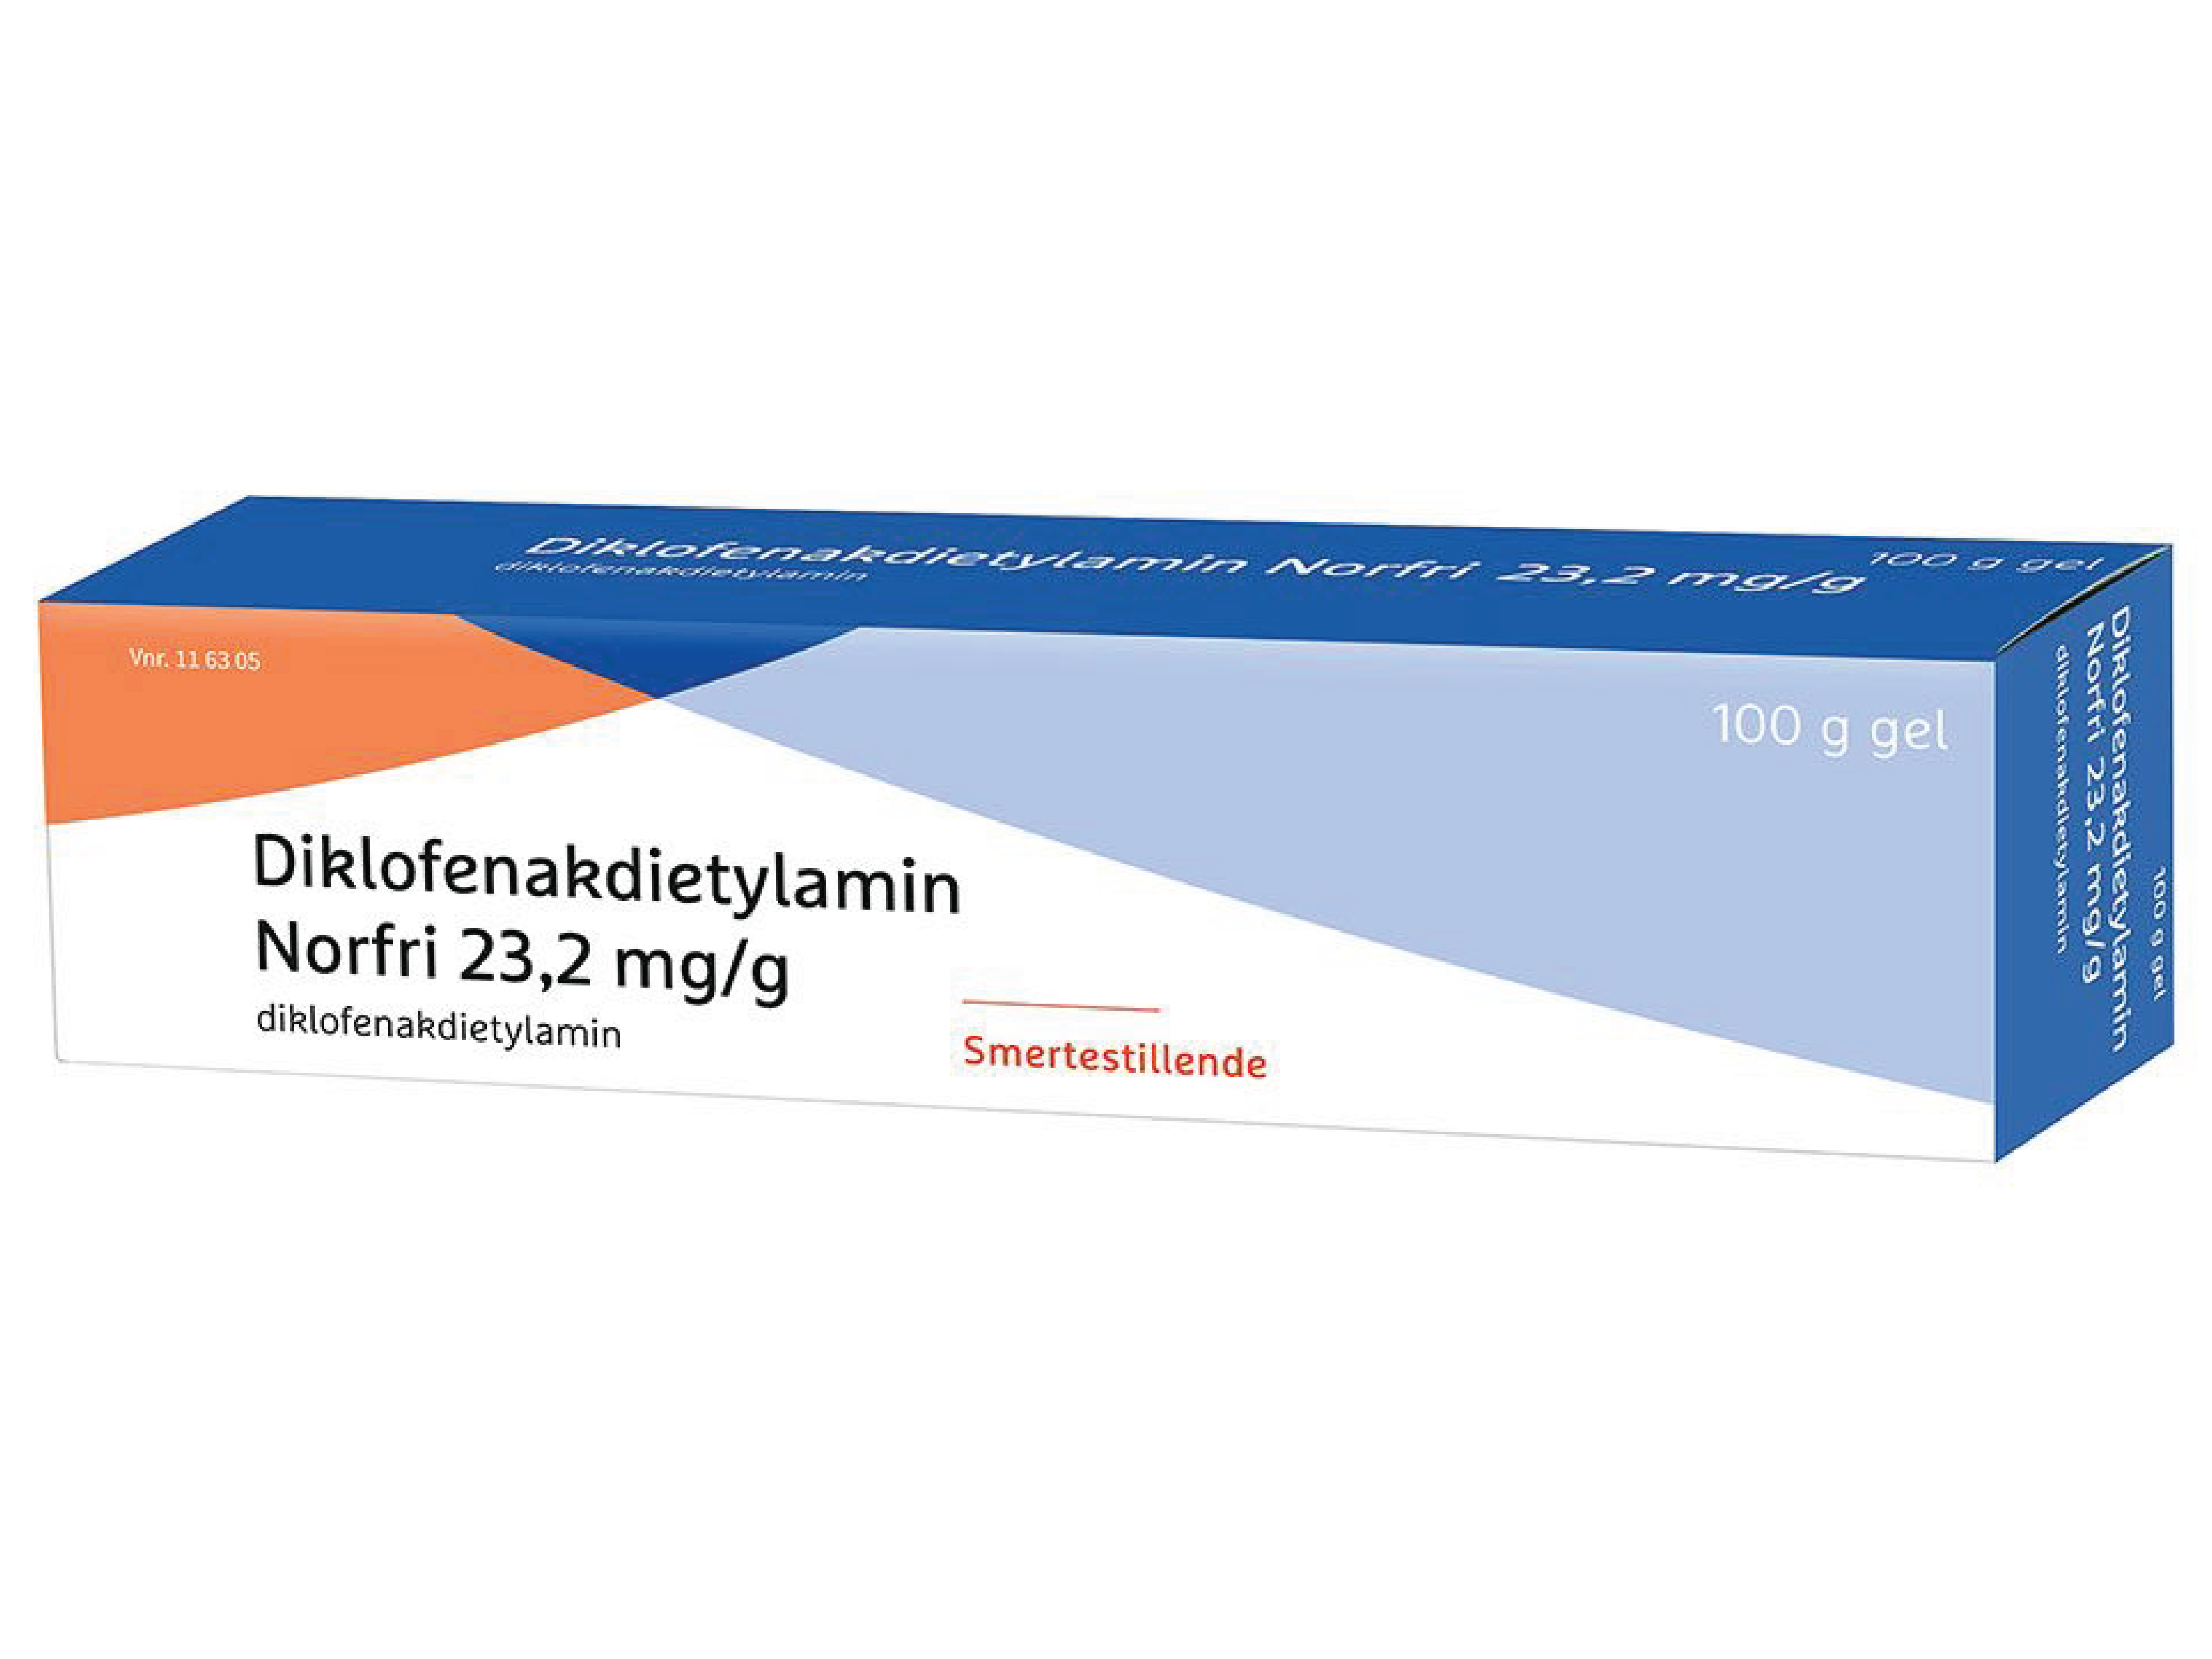 Diklofenakdietylamin Norfri 23,2 mg/g gel, 100 gram